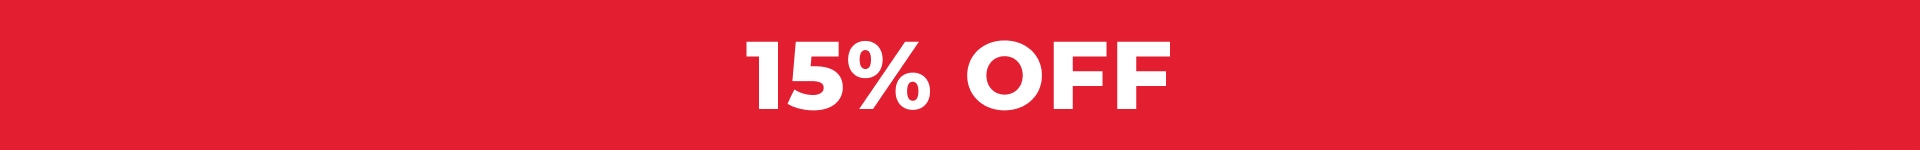 15% OFF